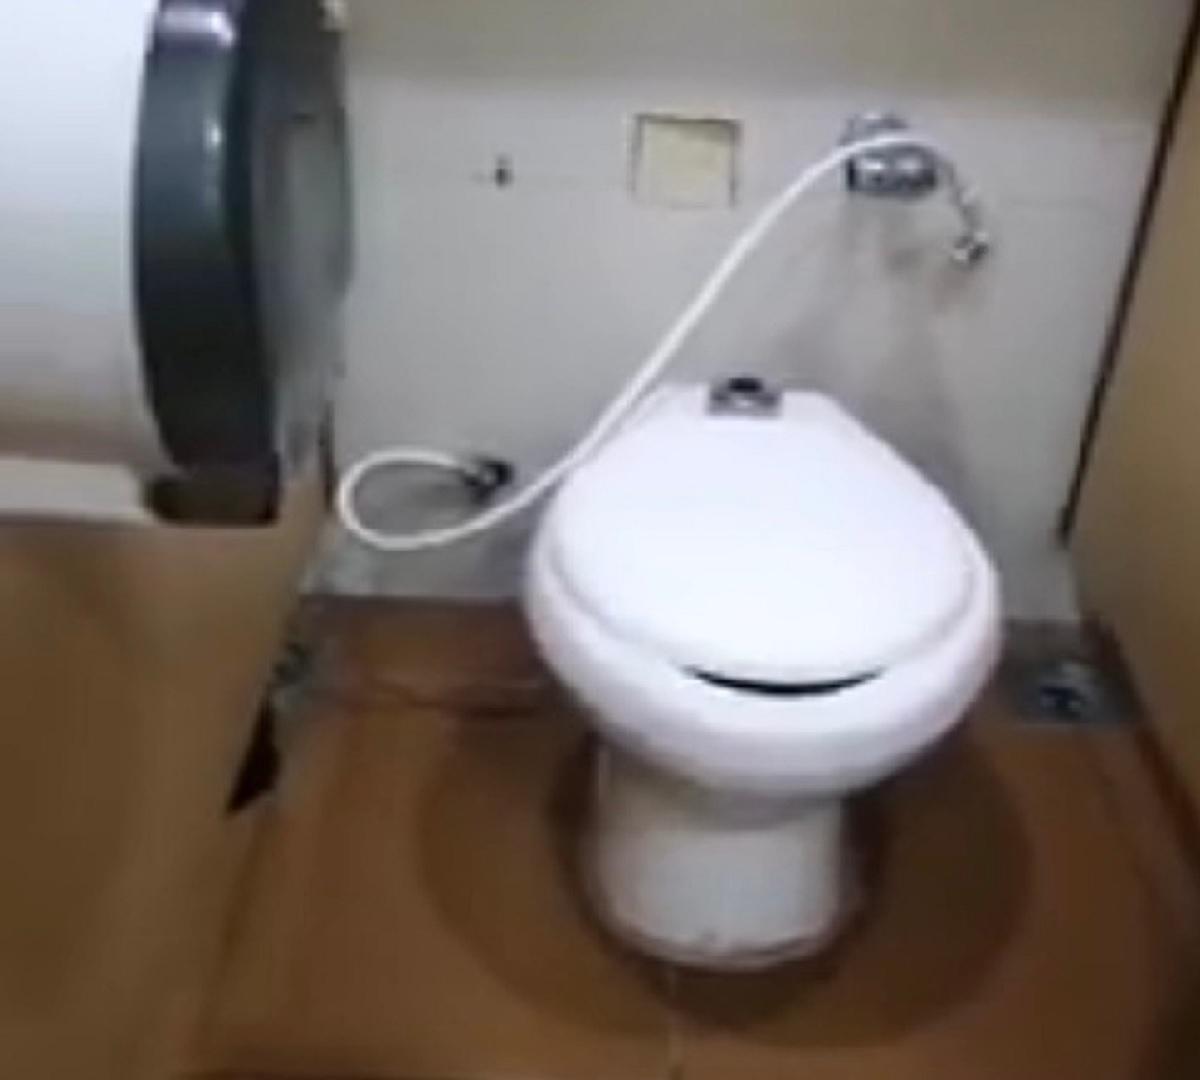 6 katup siram toilet di NAIA, ditargetkan oleh pencuri